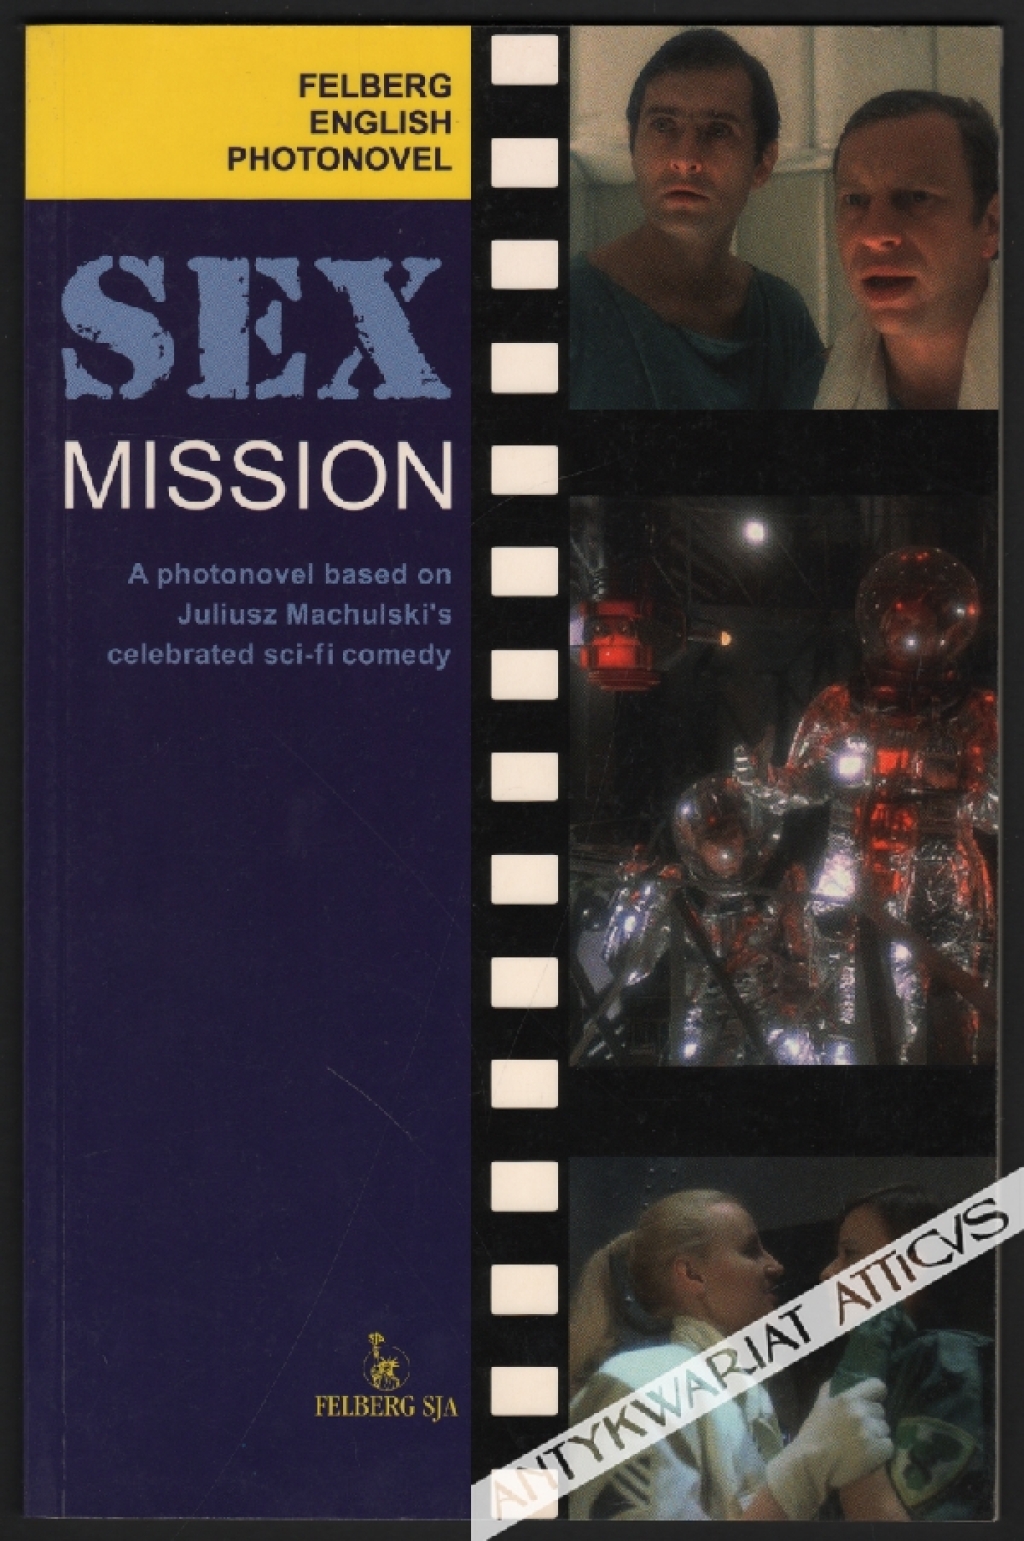 Sex Mission. A photonovel based on Juliusz Machulski's celebrated sci-fi comedy